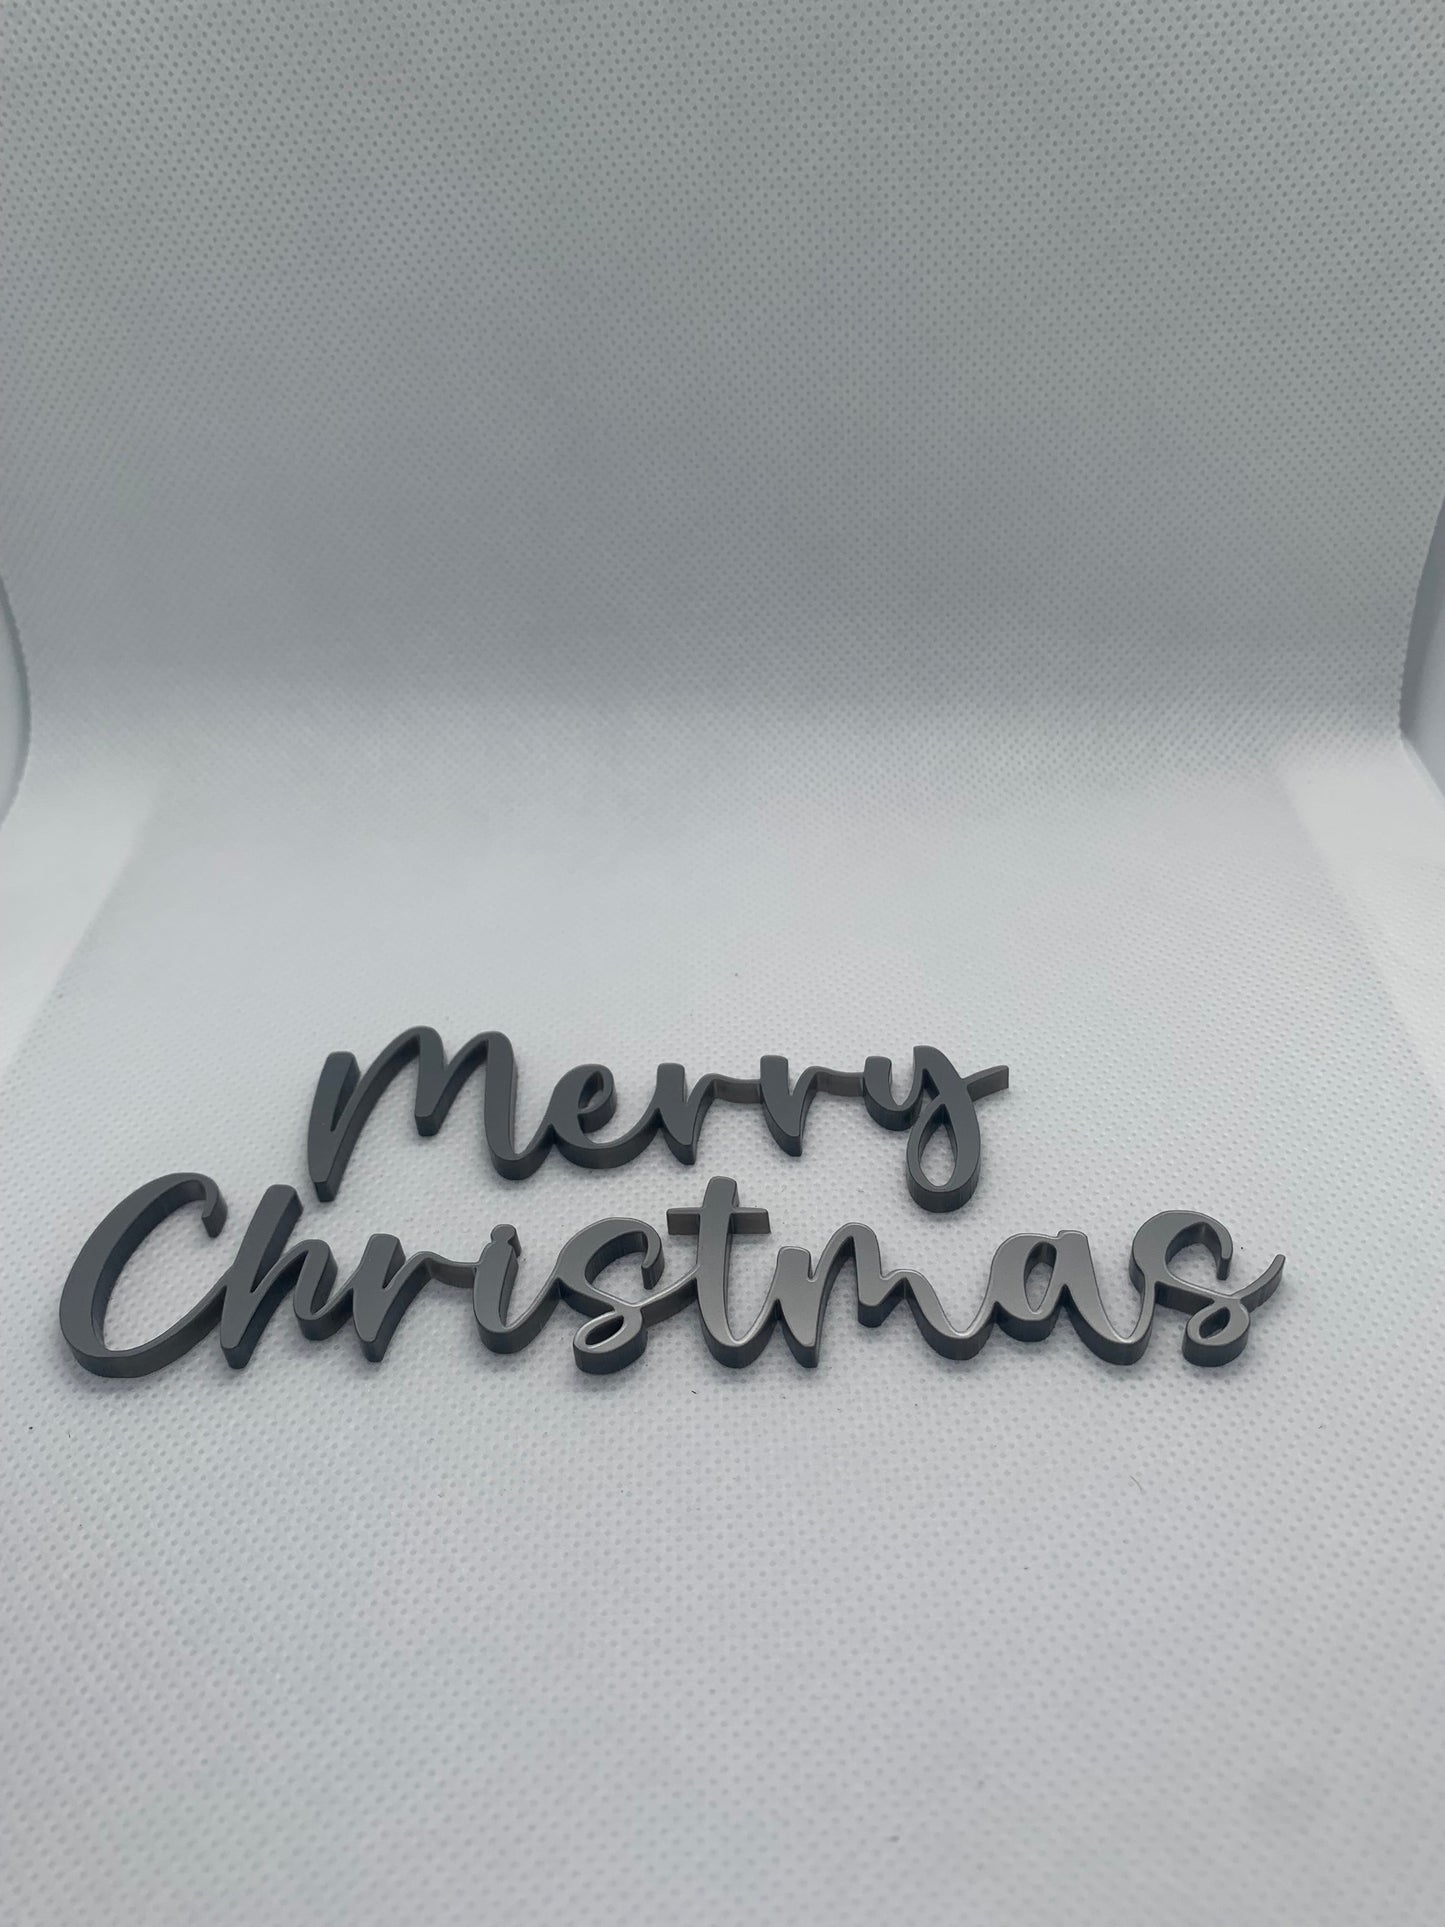 Merry Christmas - Creative Designs By Kari